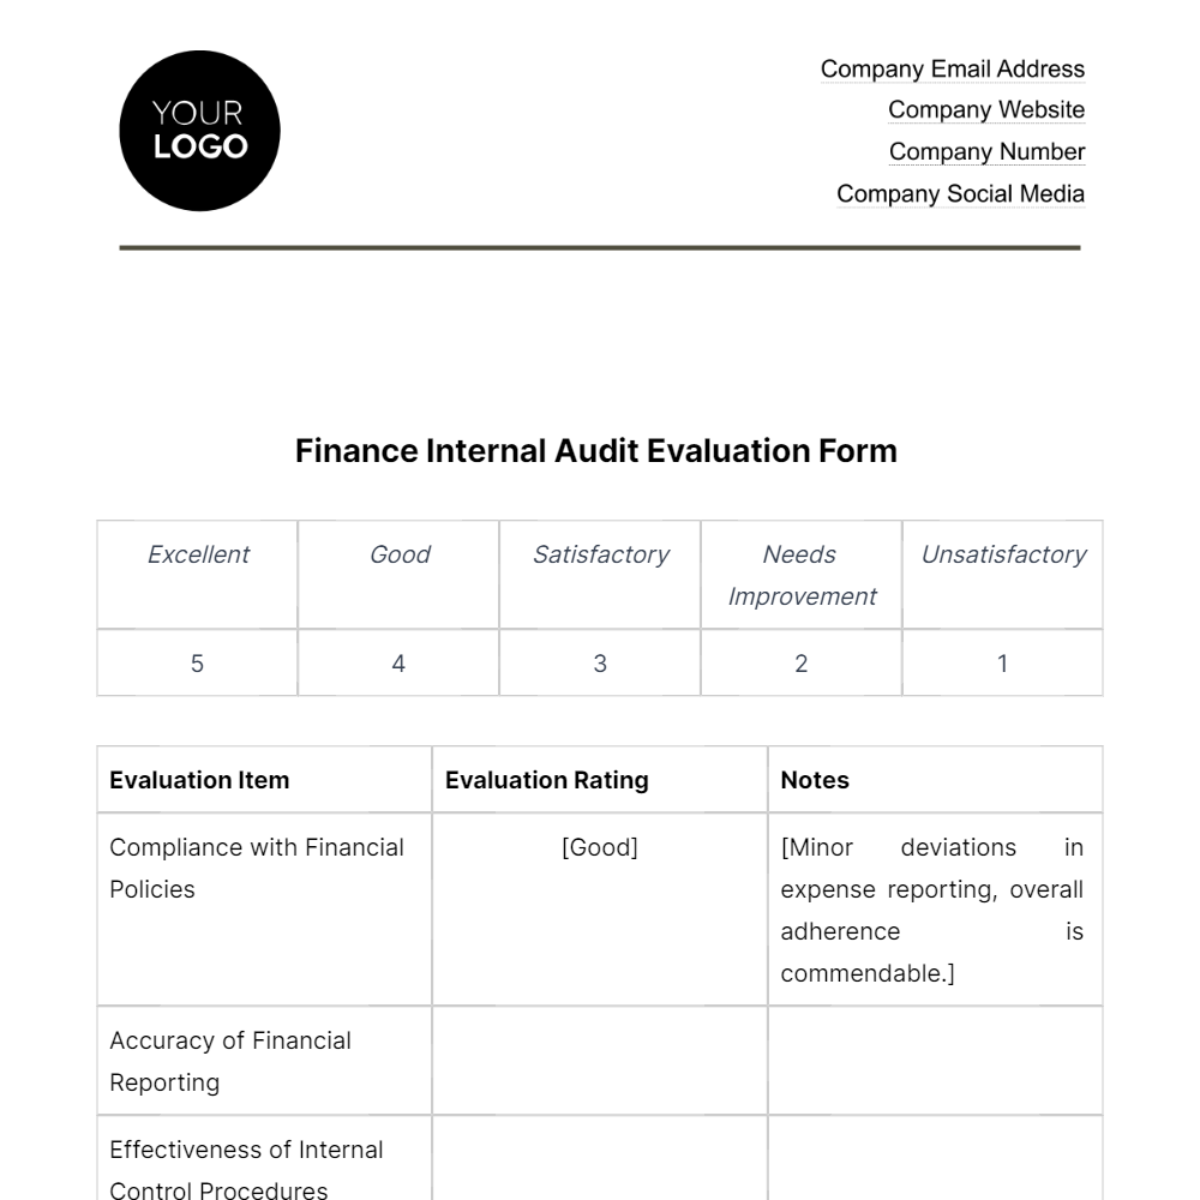 Free Finance Internal Audit Evaluation Form Template